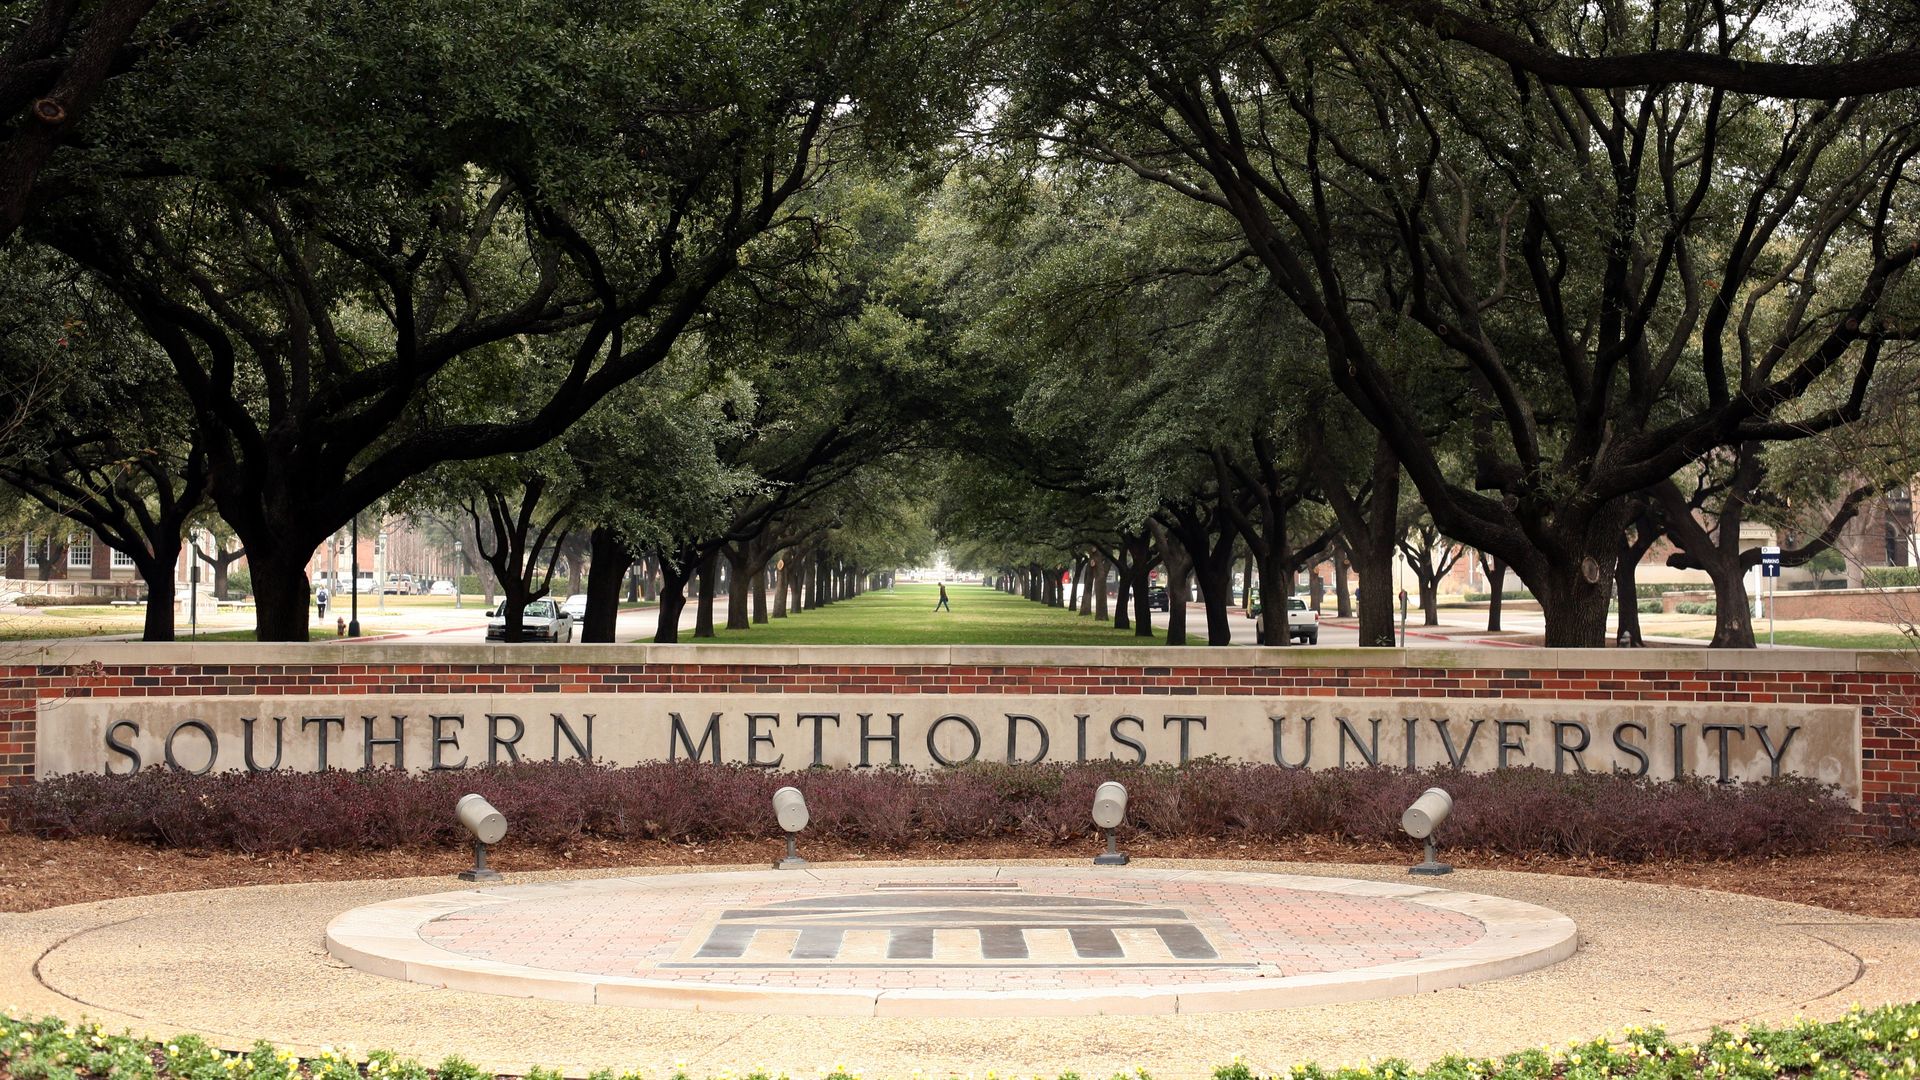 The entrance of Southern Methodist University